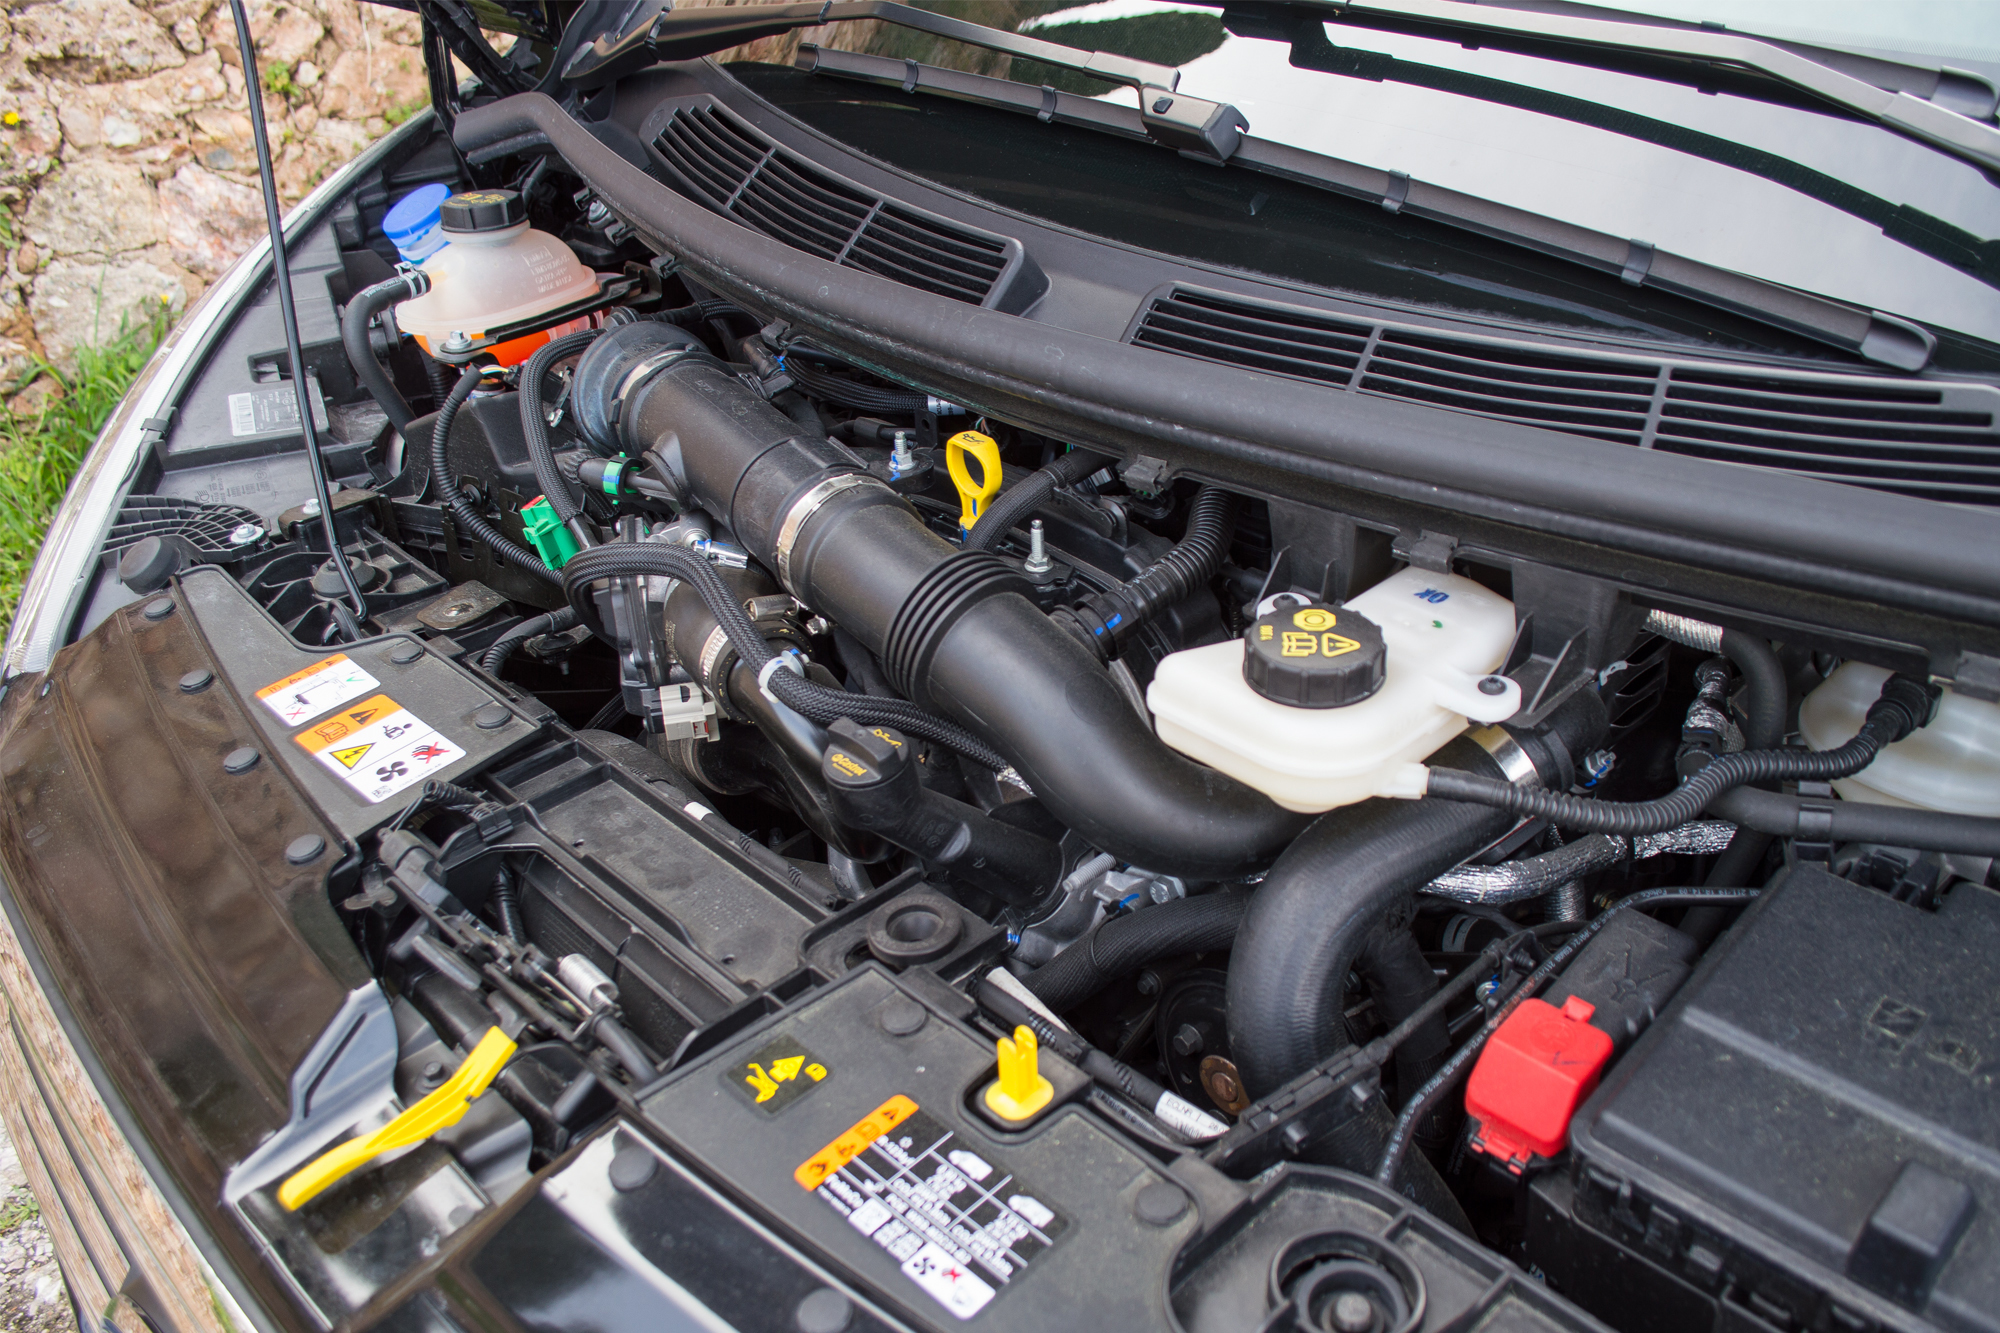 Ford Tourneo Custom L1 Plug-in Hybrid 125Ps